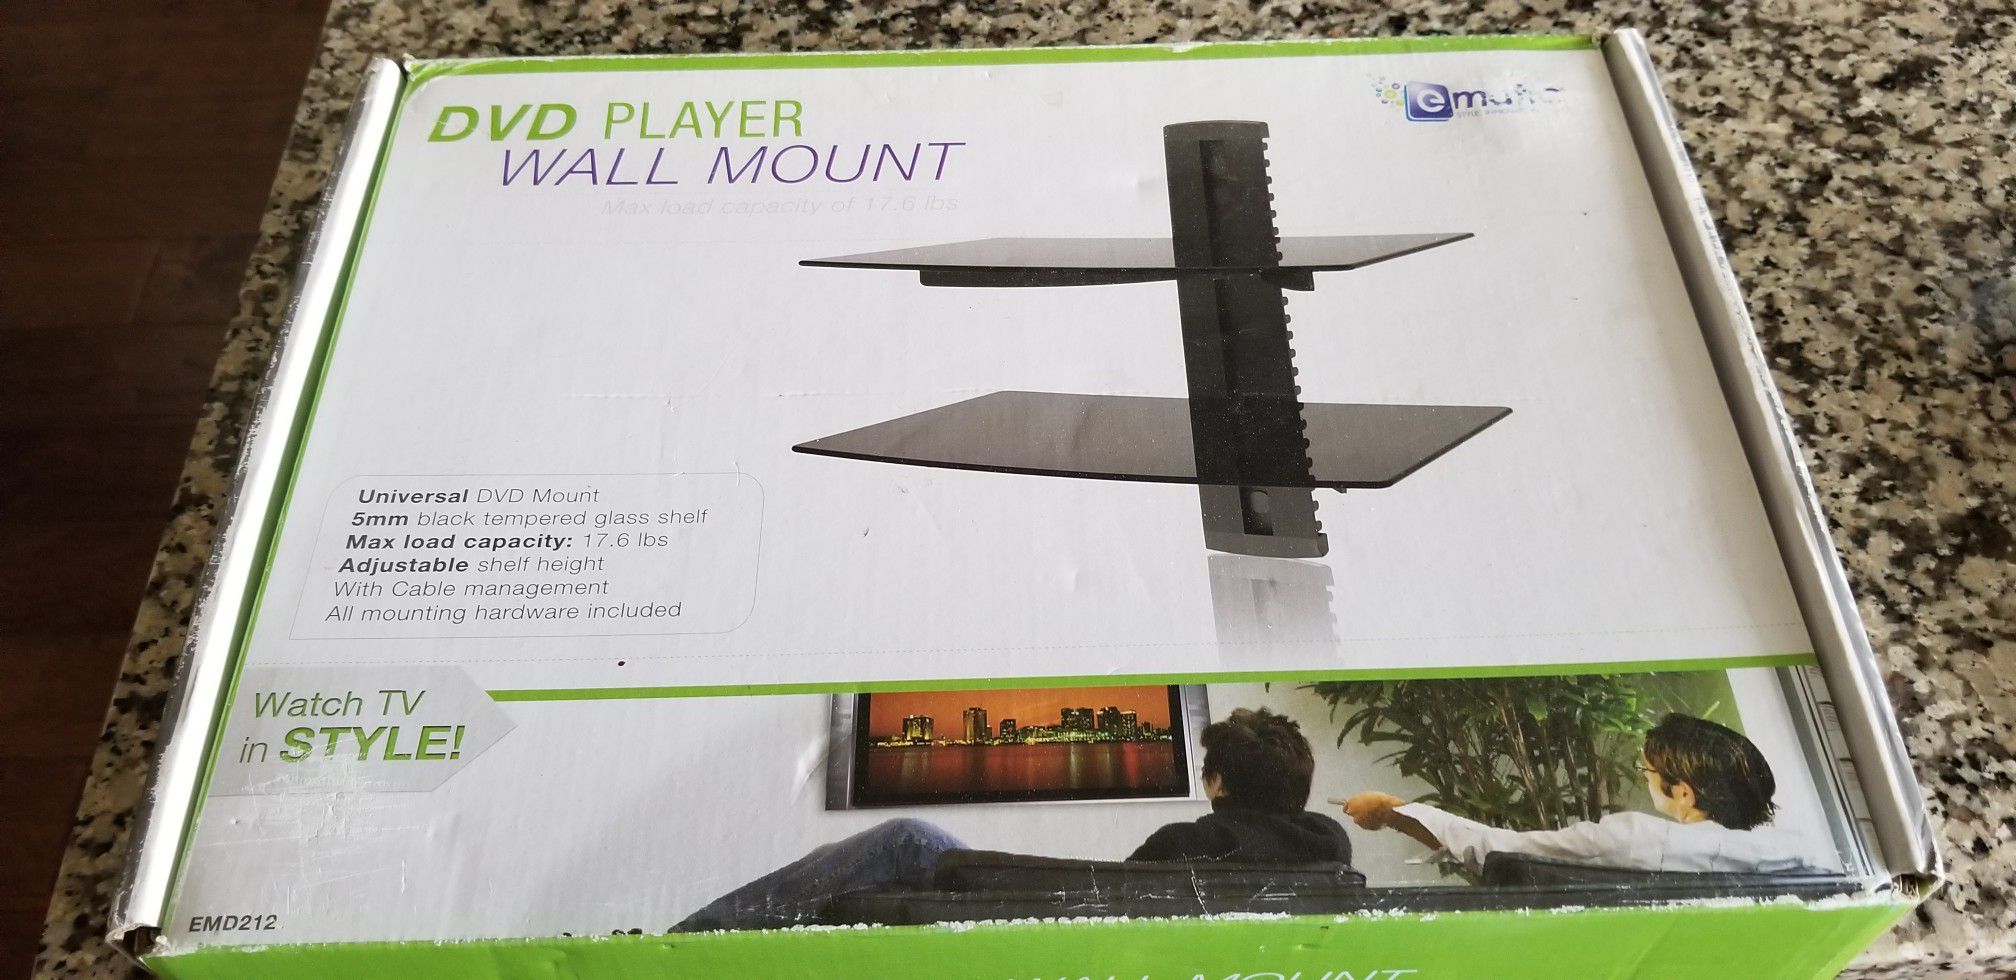 DVD wall mount